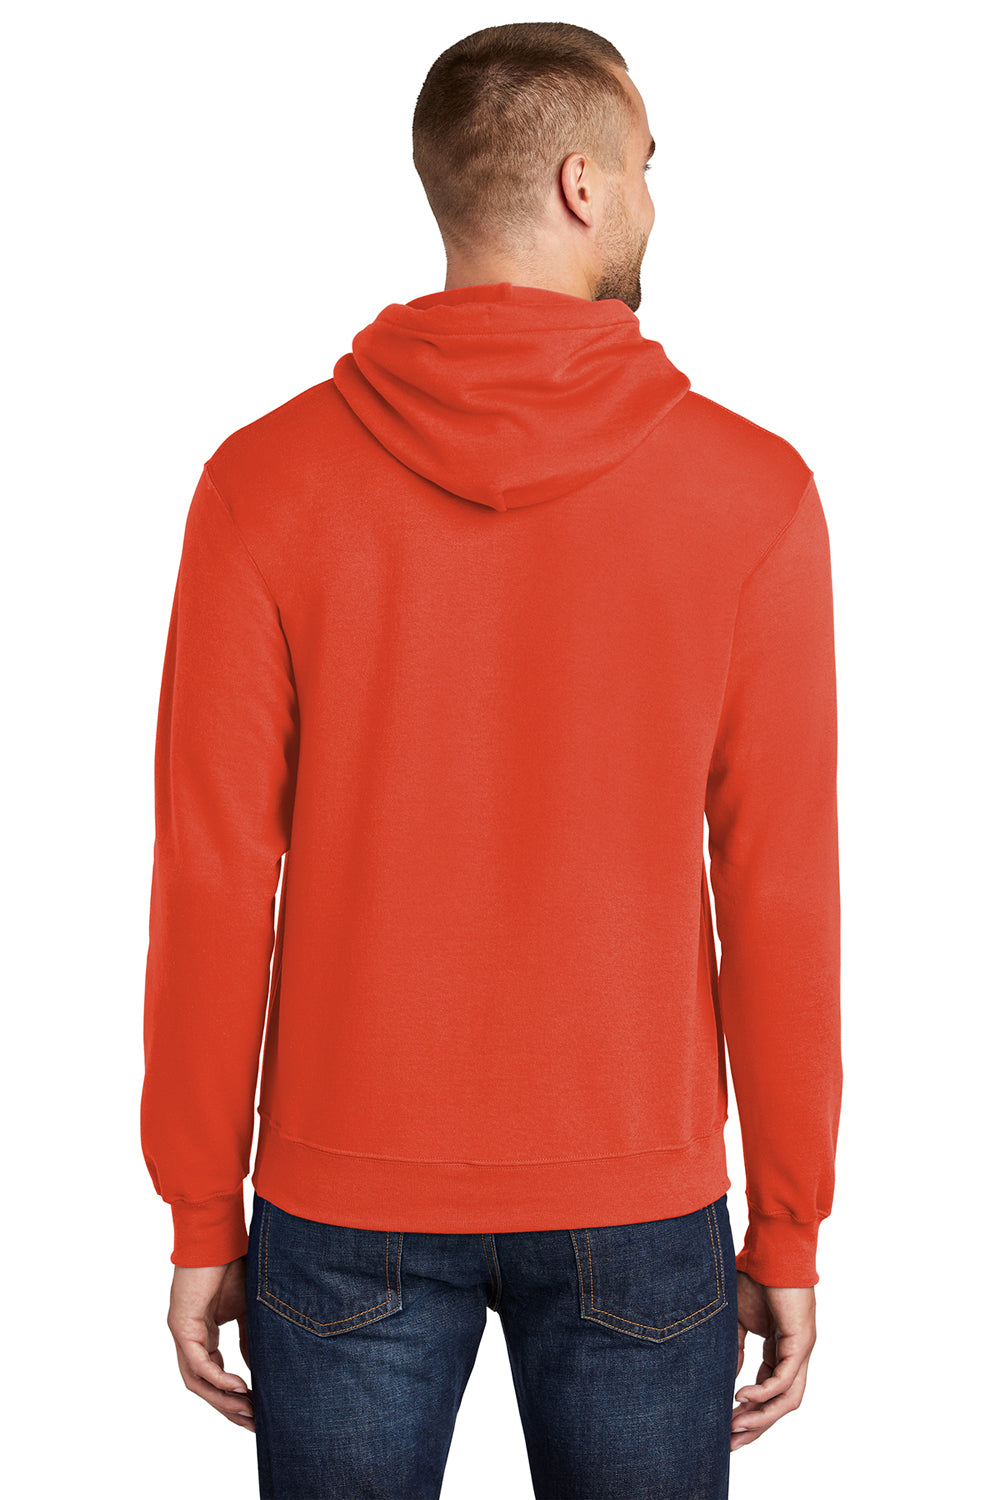 Port & Company PC78H Mens Core Fleece Hooded Sweatshirt Hoodie Orange Back